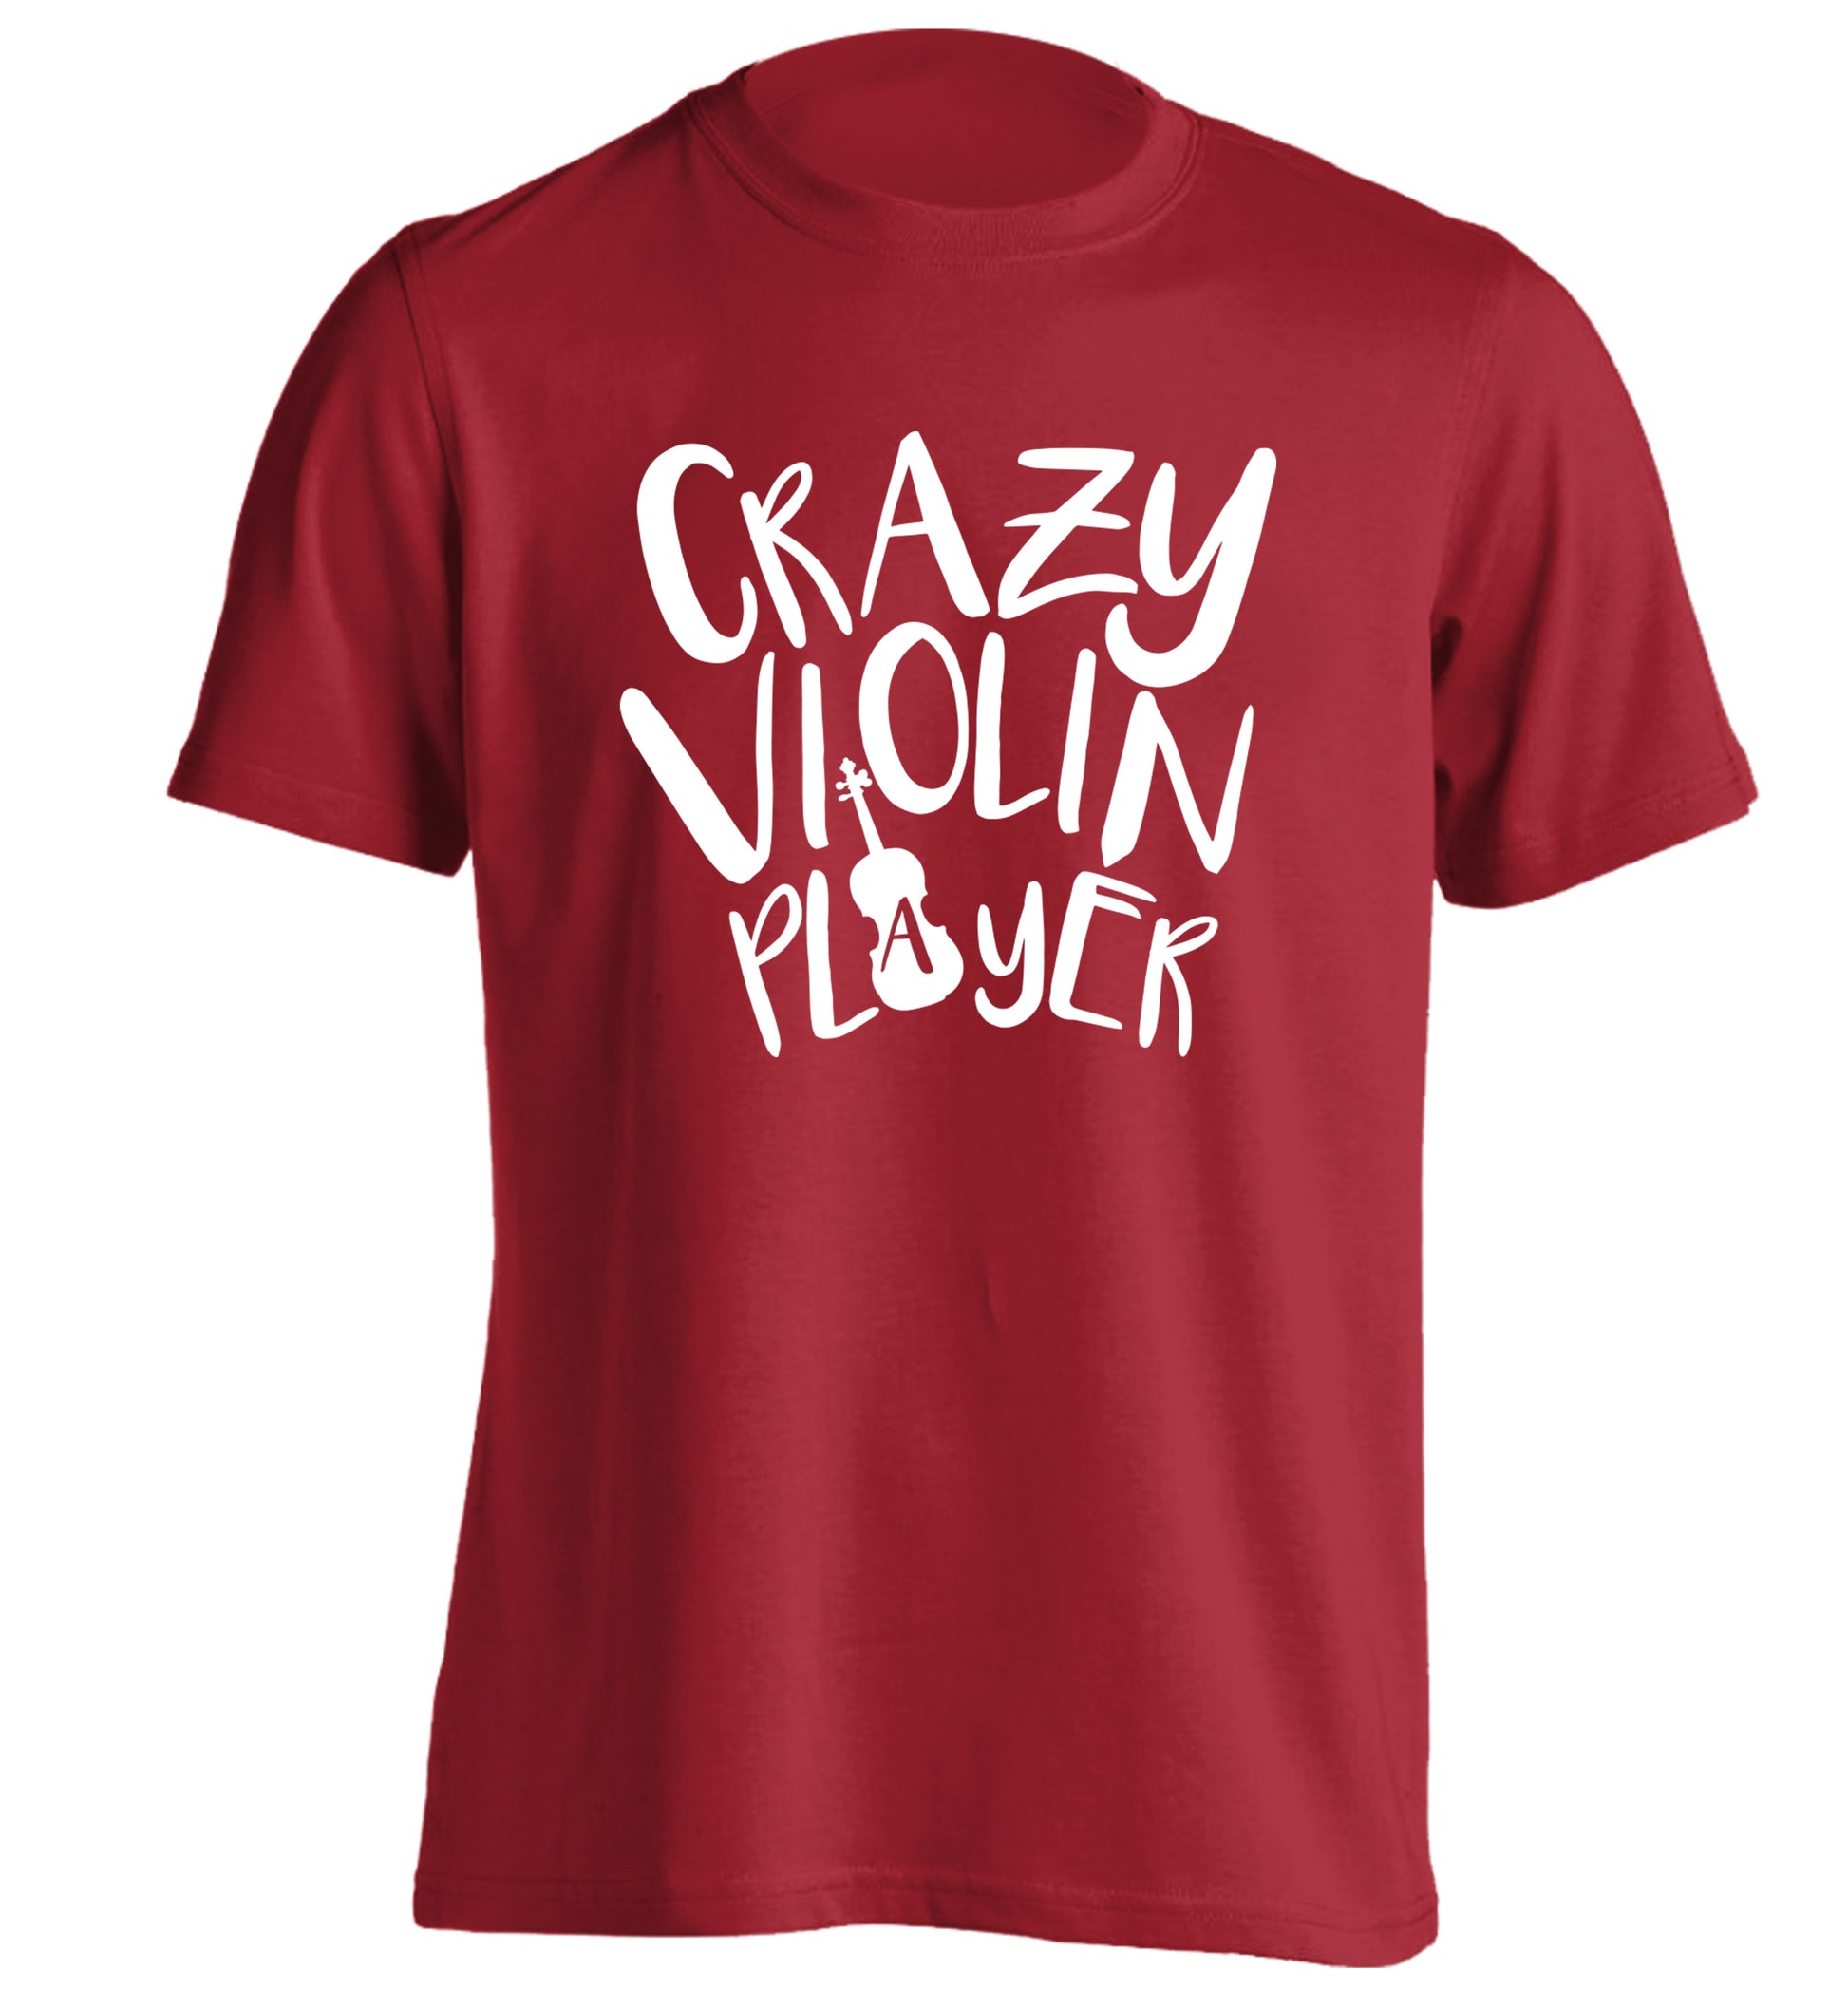 Crazy Violin Player adults unisex red Tshirt 2XL